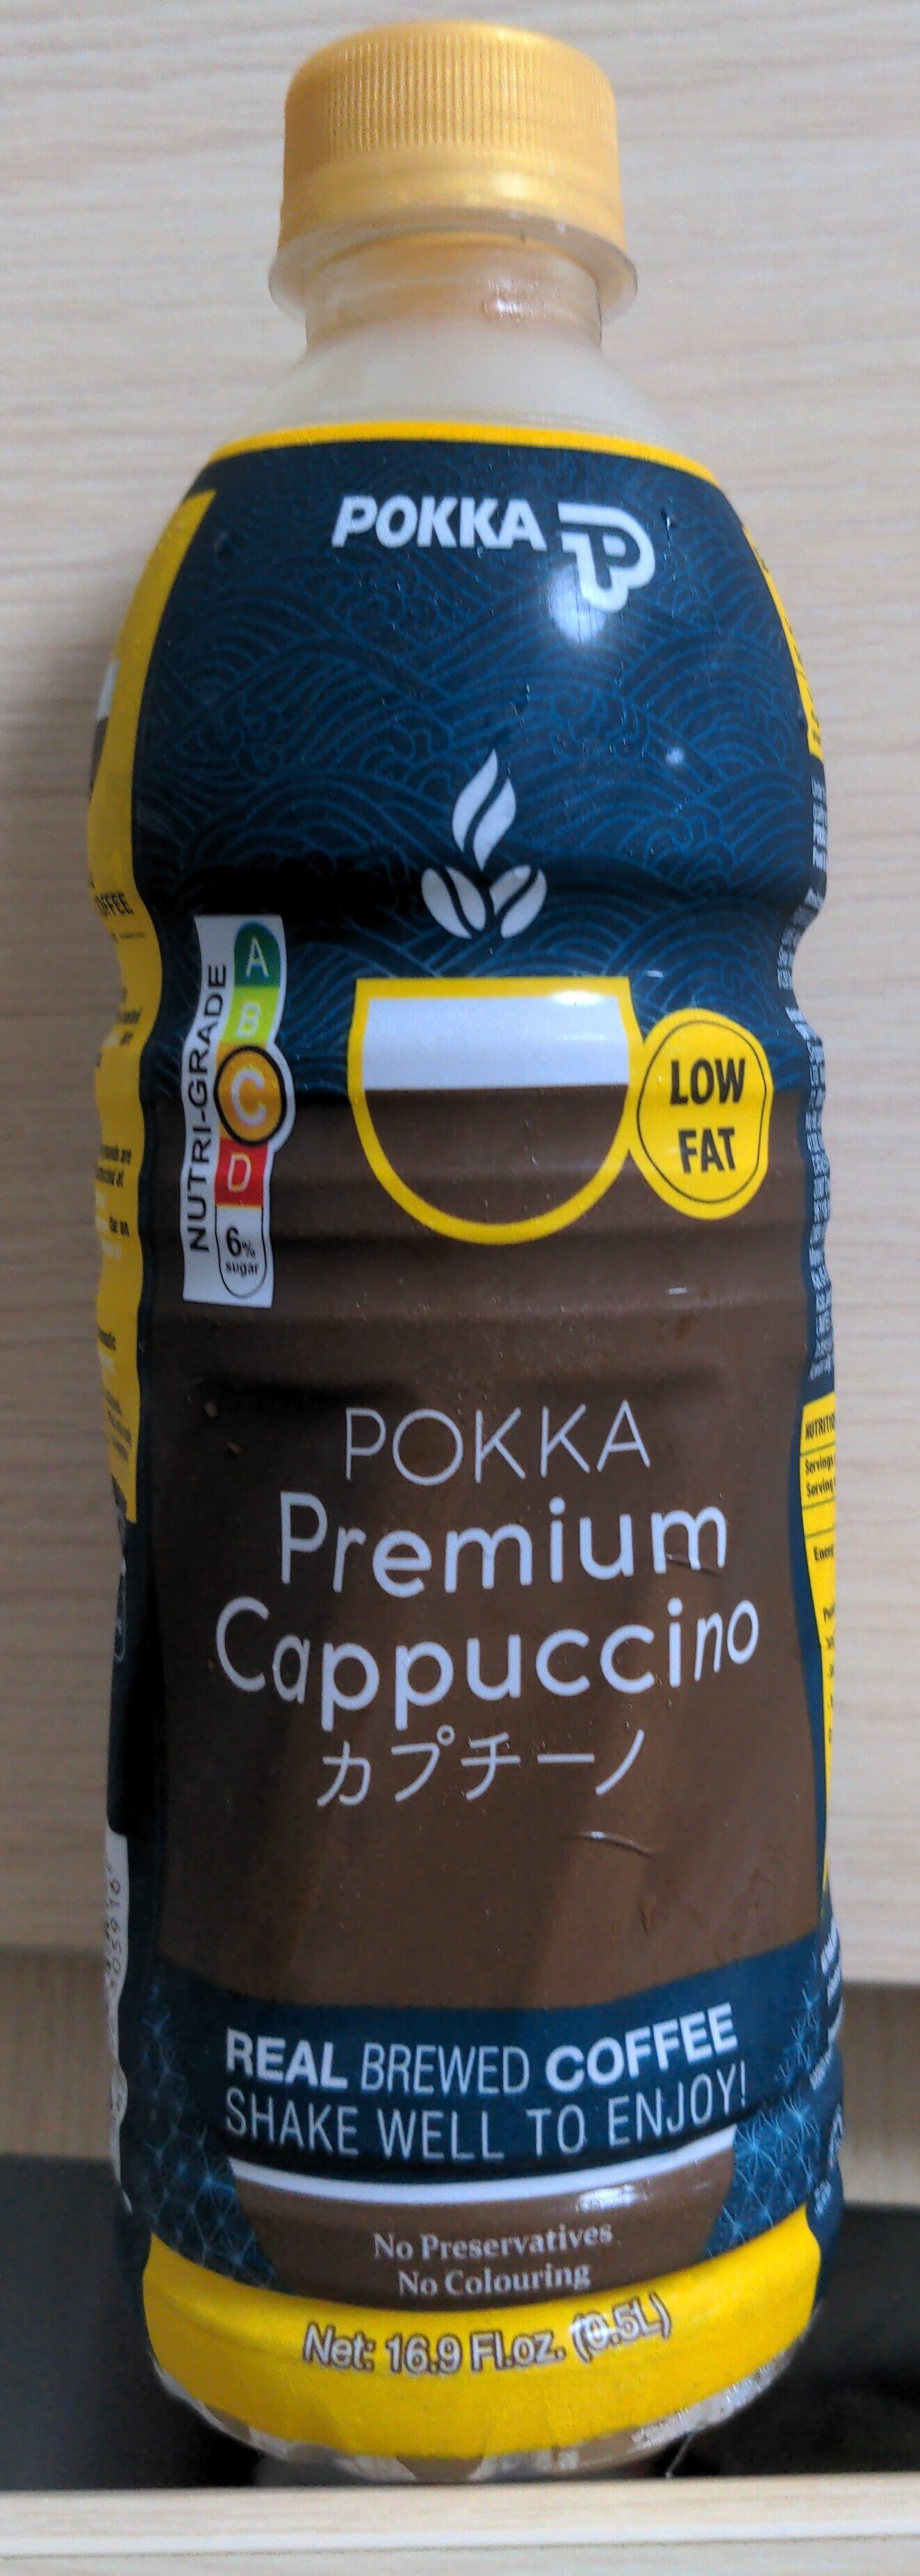 Pokka Premium Cappuccino - Product